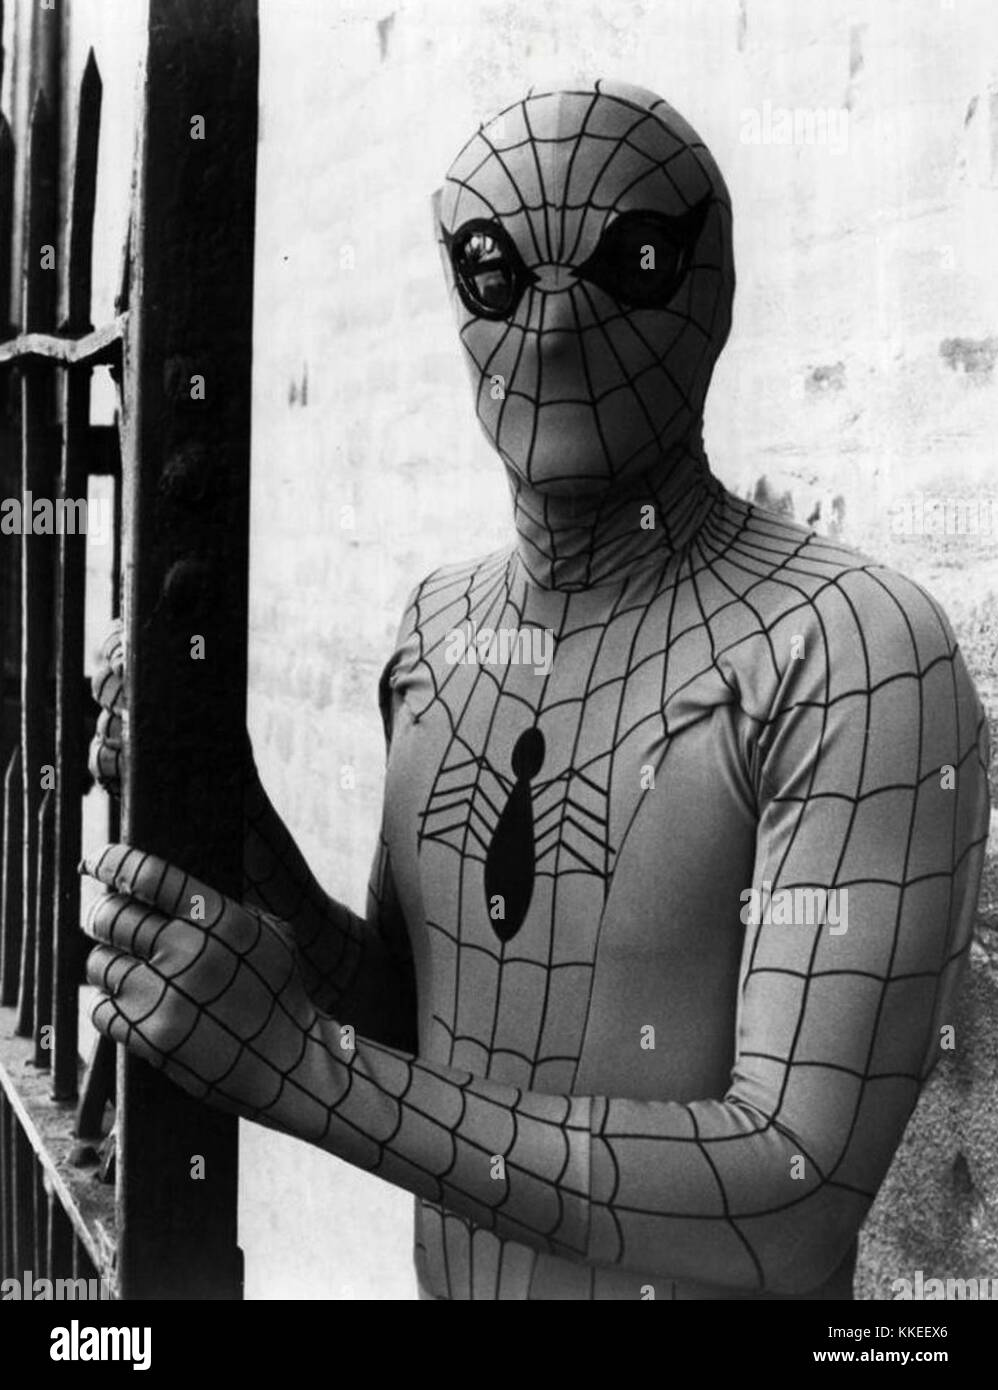 Nicholas Hammond Amazing Spider-Man 1977 Stockfoto